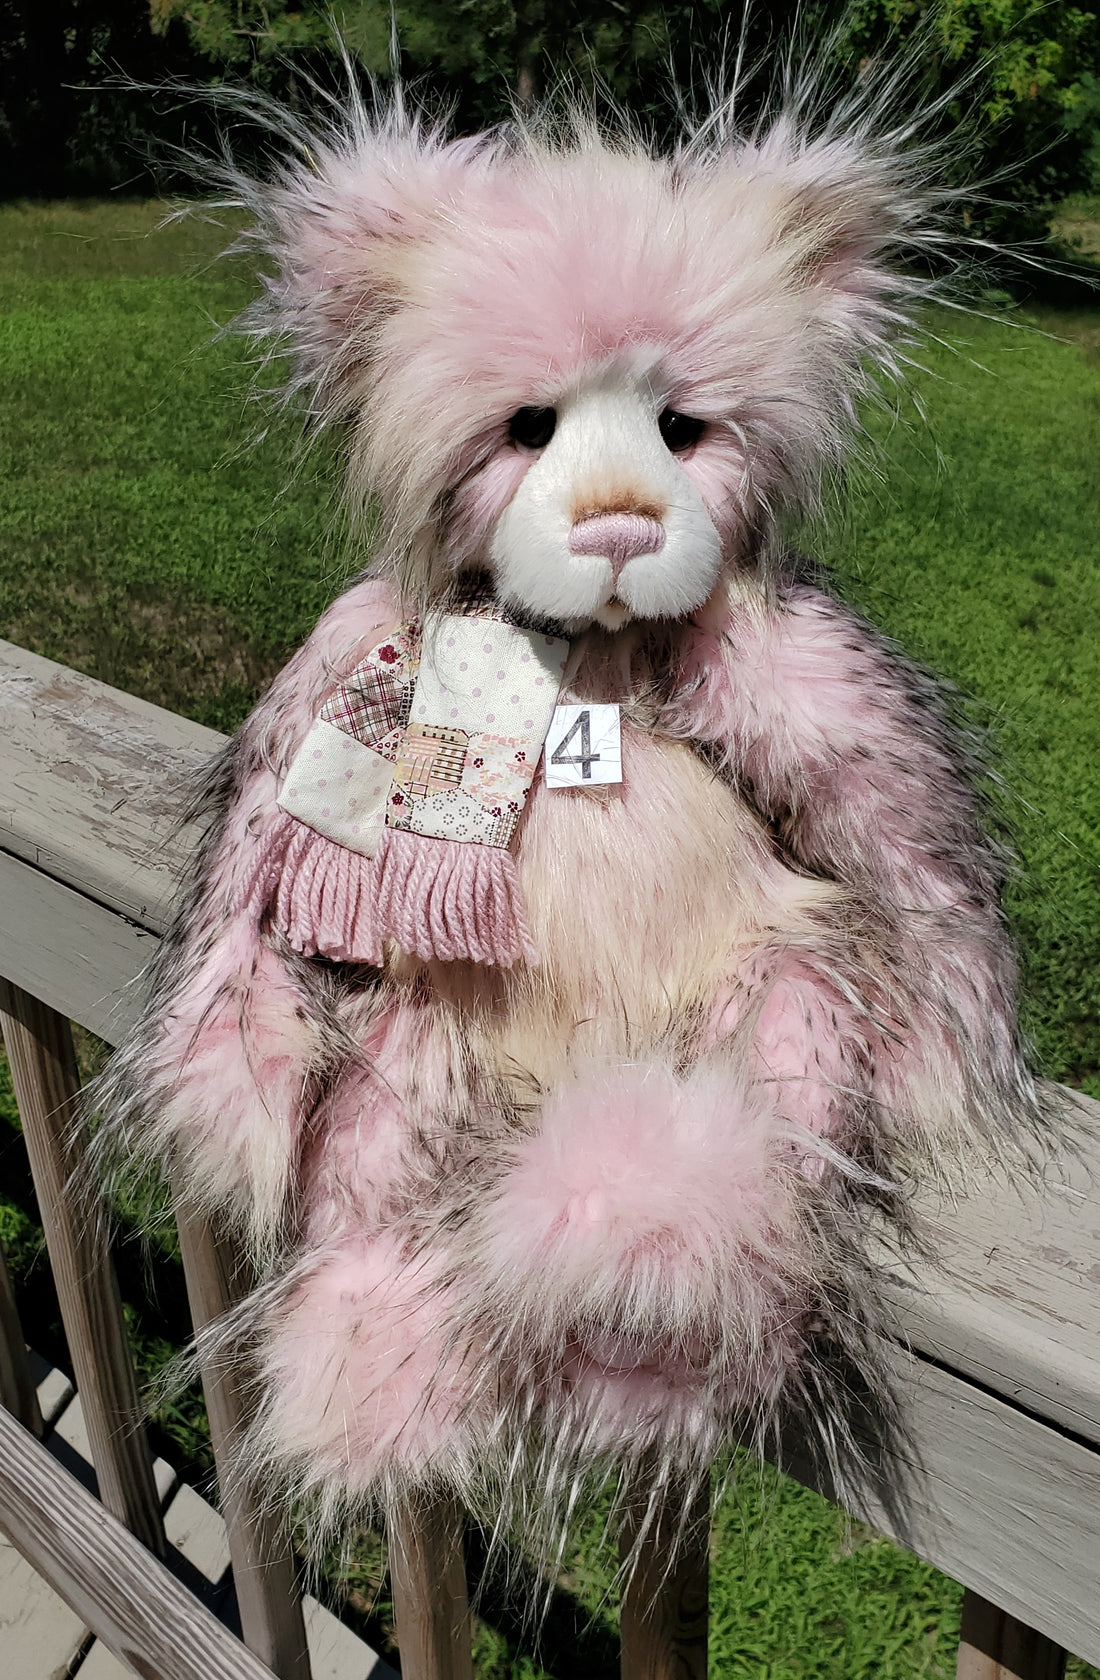 Hilary - 19" Luxurious Pink Long Plush Bear by Charlie Bears